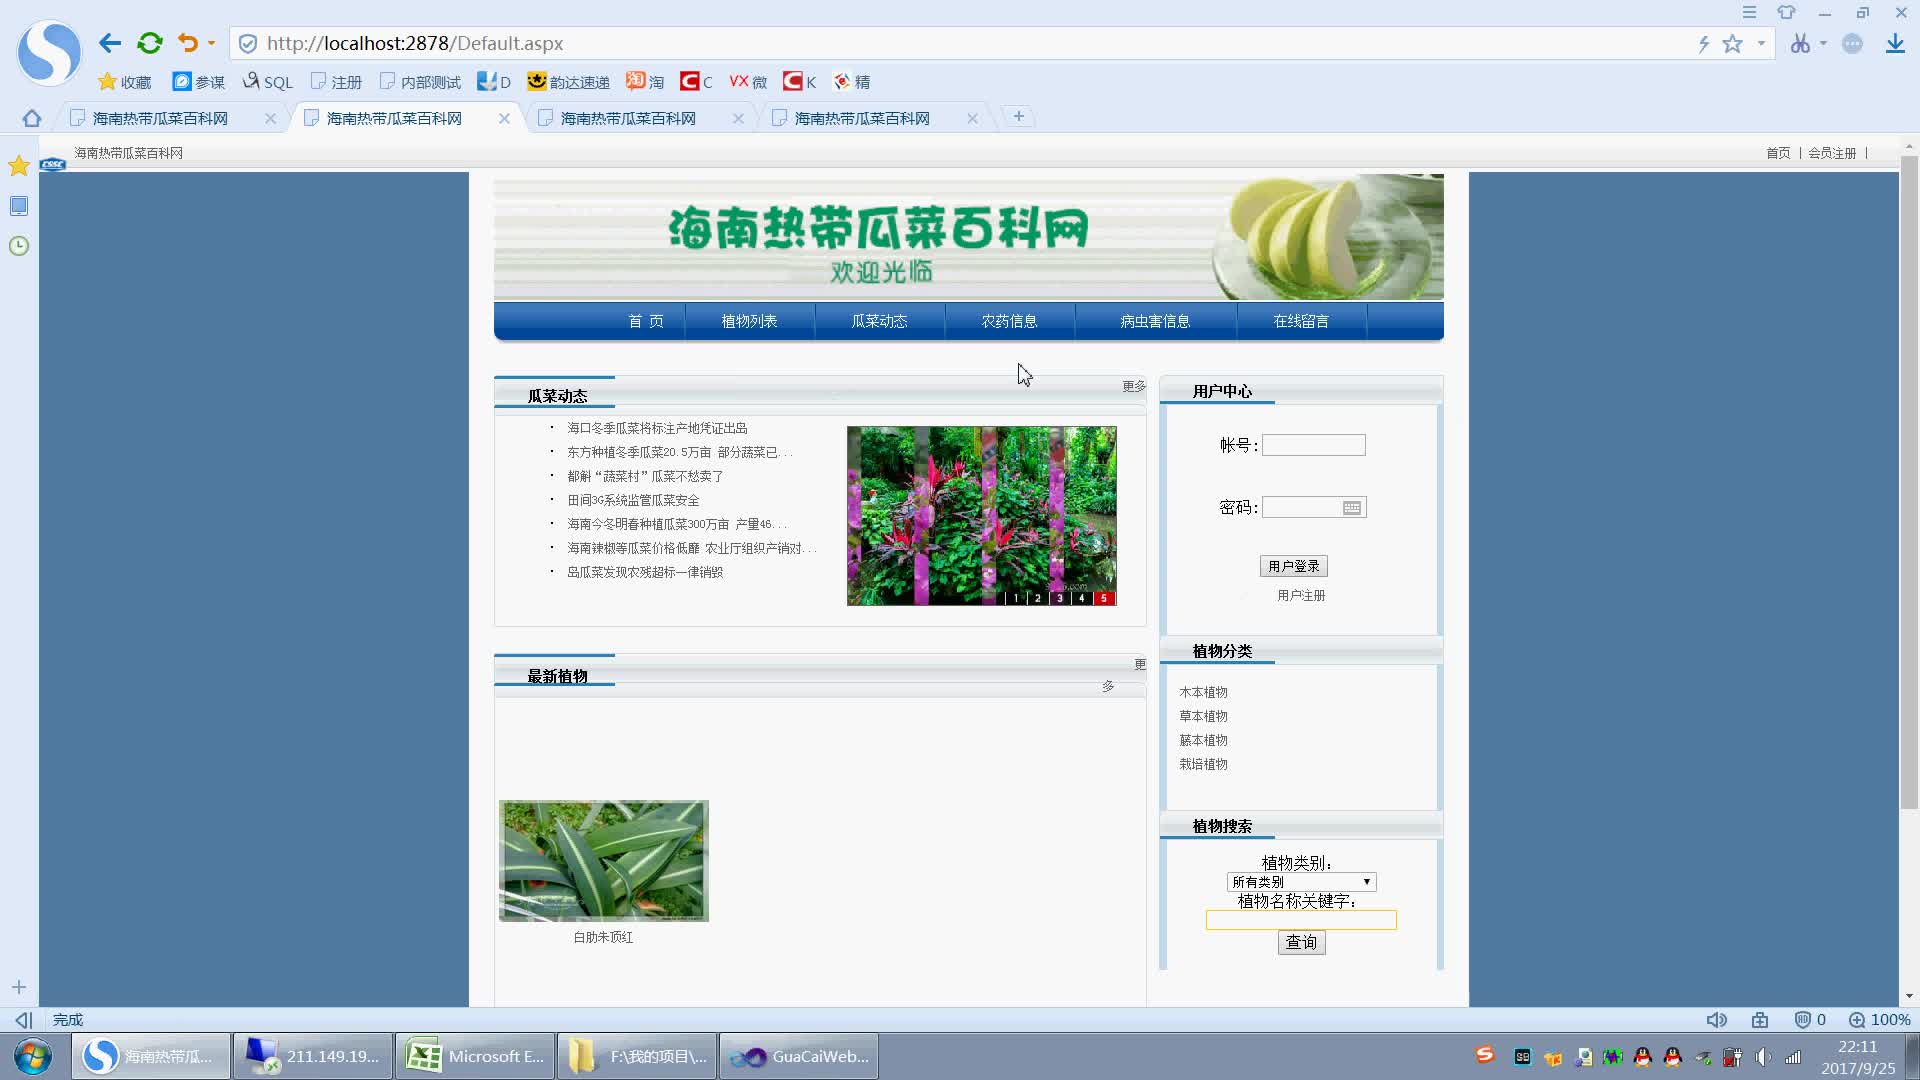 ASP.NET 海南热带瓜菜百科网信息管理系统的设计与实现